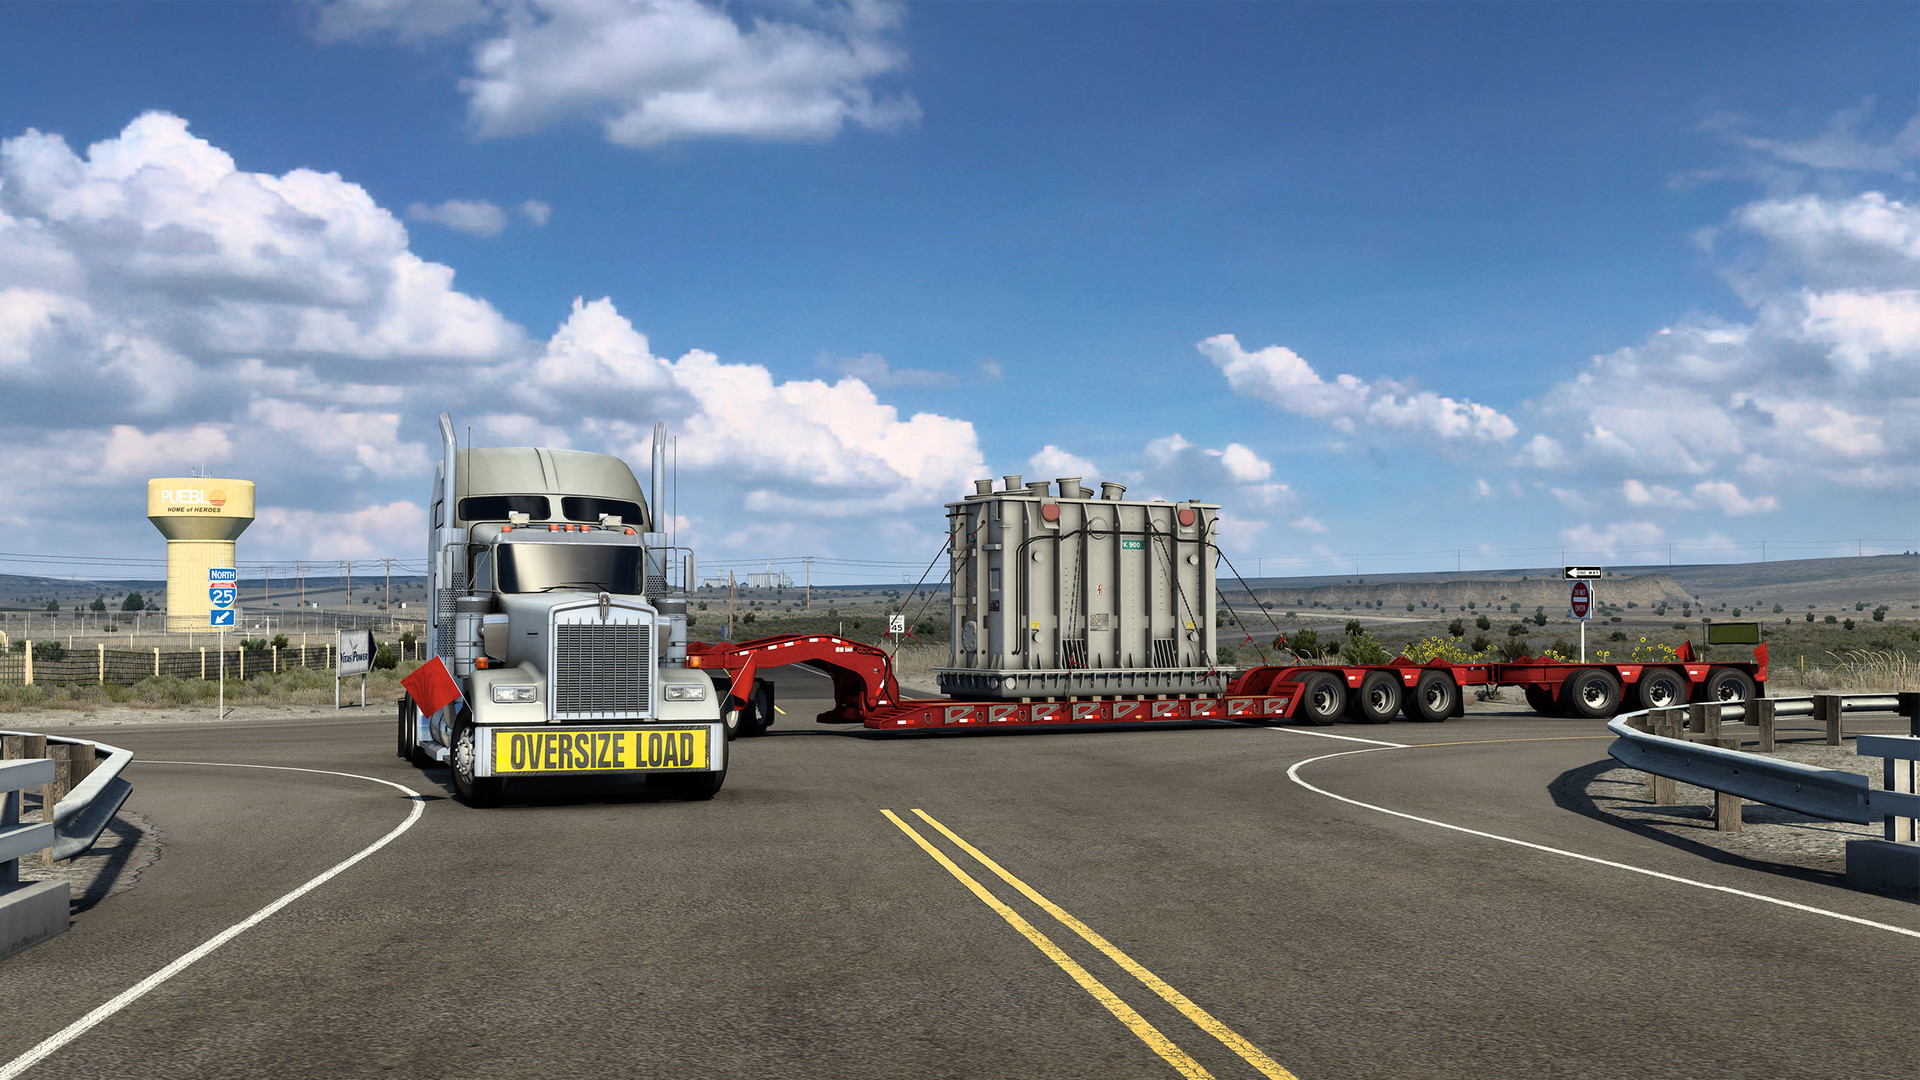 Heavy Cargo - The Truck Simulator on Steam